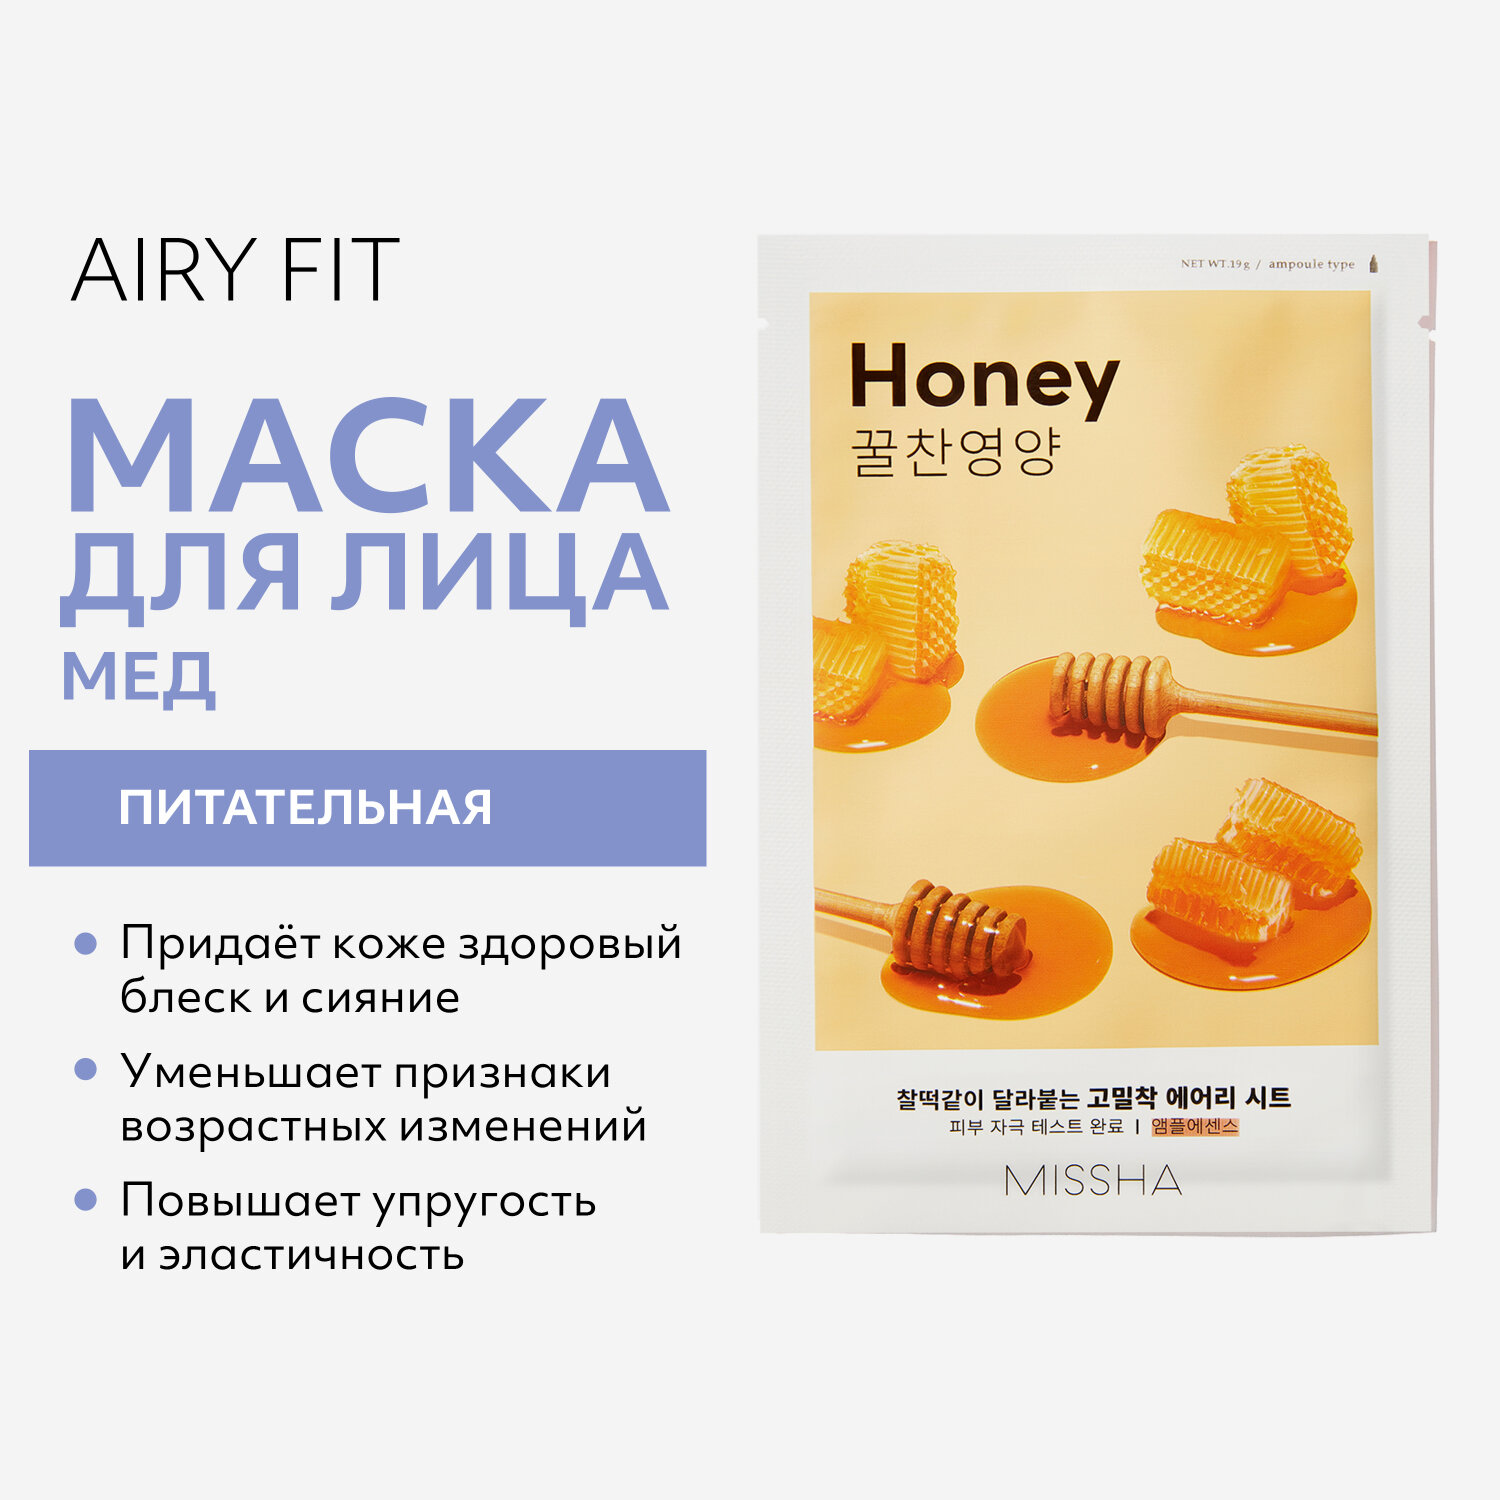 Missha Airy Fit Sheet Mask Honey питательная тканевая маска с медом